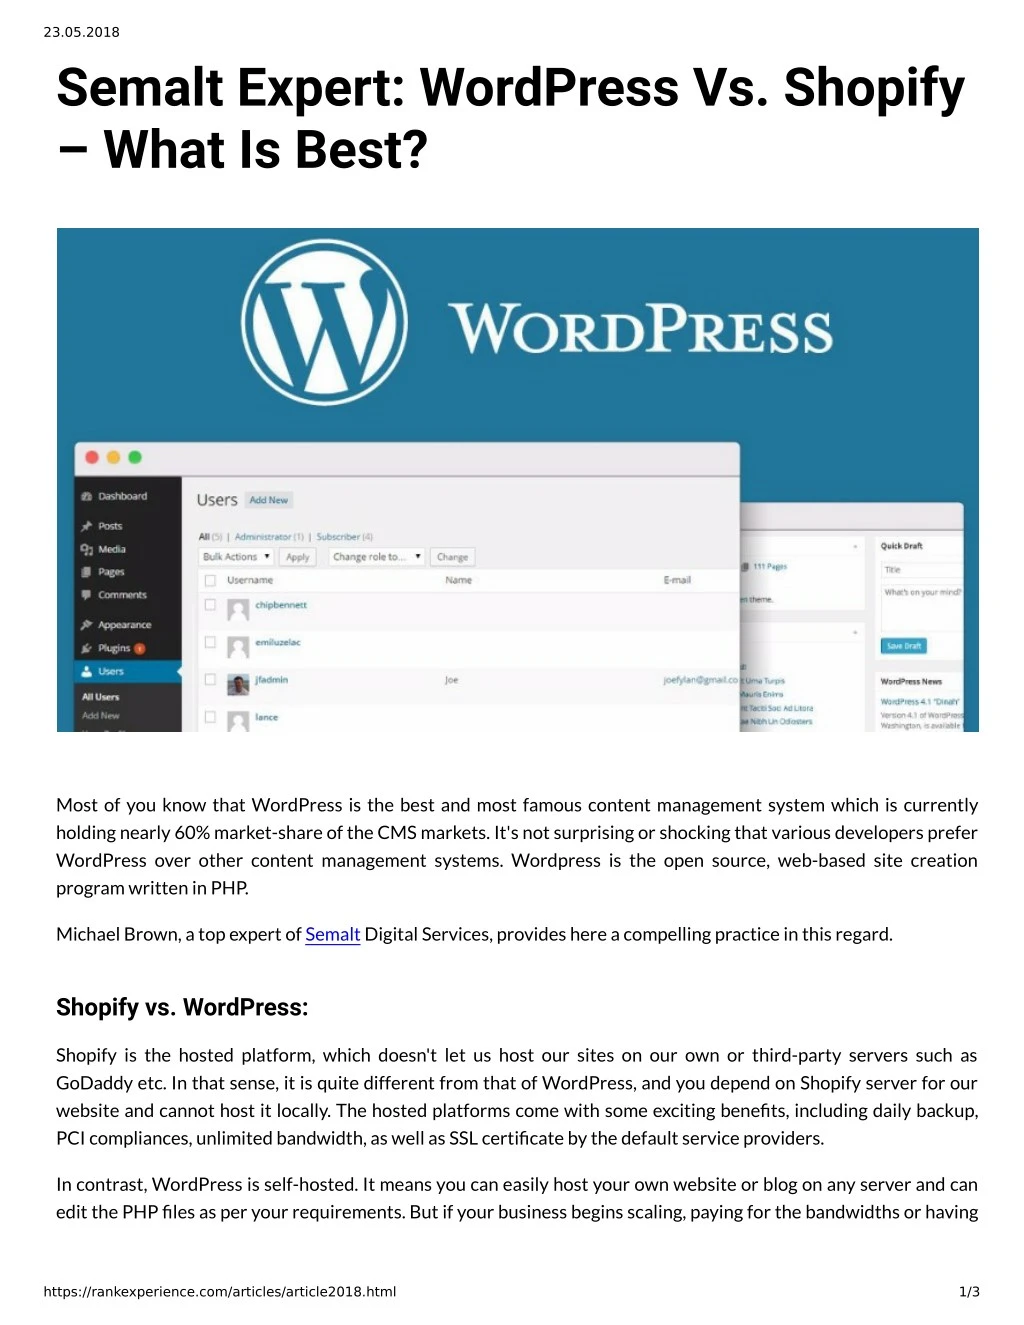 23 05 2018 semalt expert wordpress vs shopify